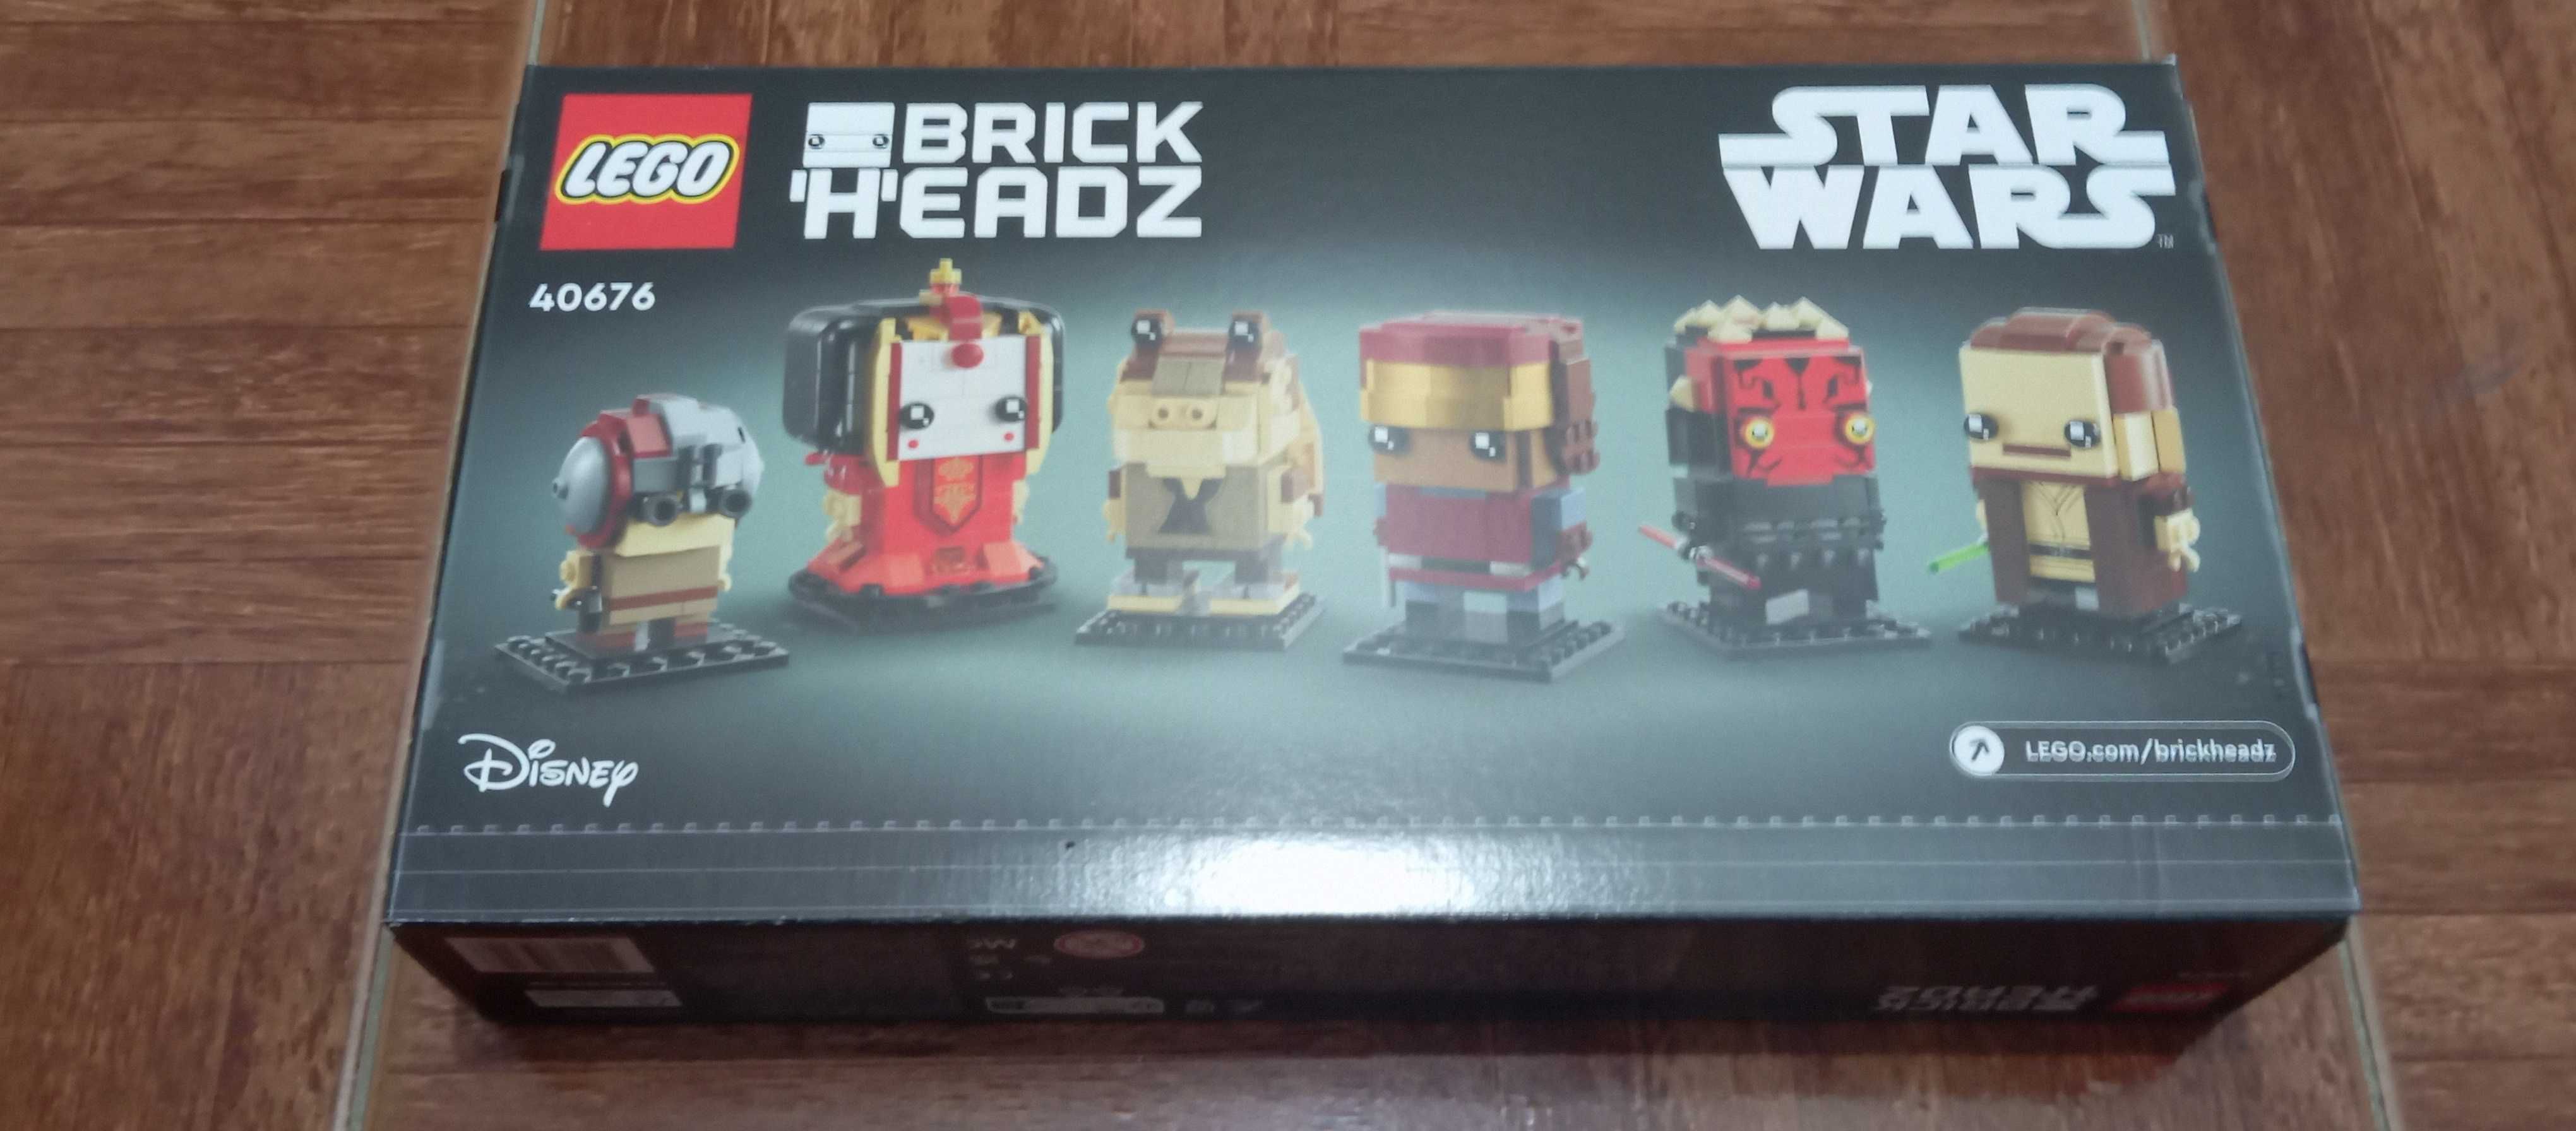 40676 LEGO Brickheadz Star Wars - The Phantom Menace